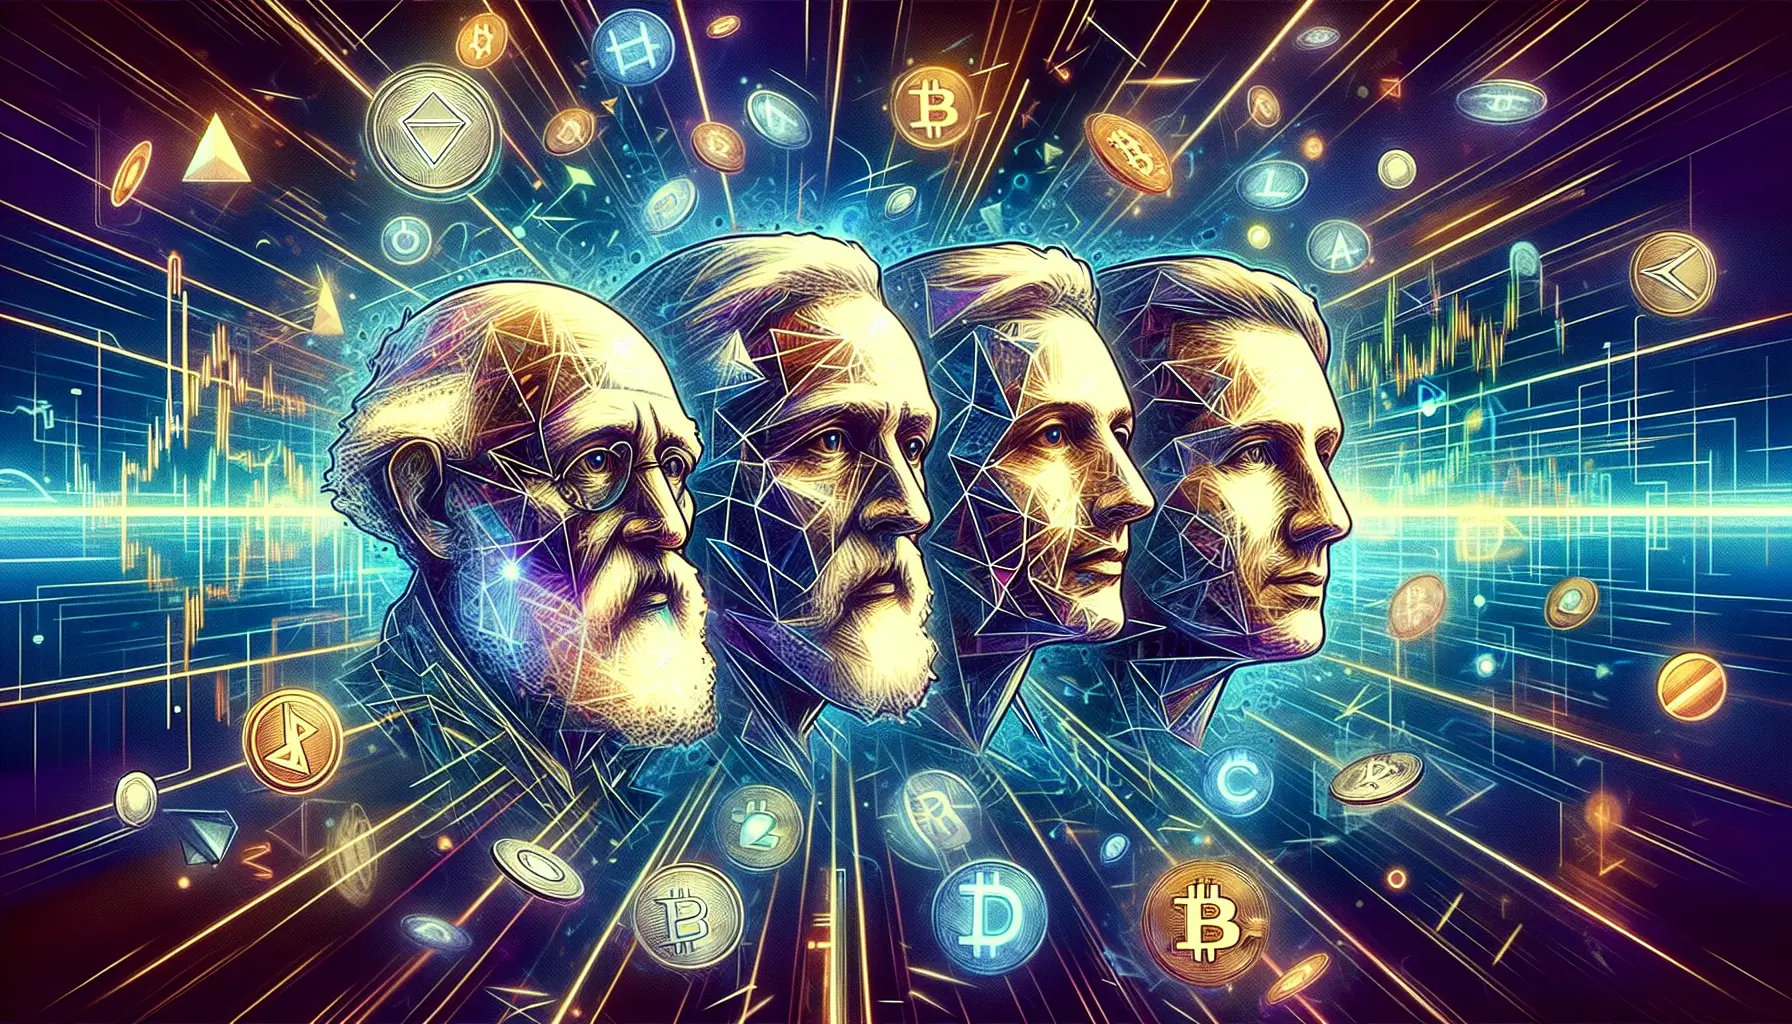 Profiles of Top Crypto Millionaires